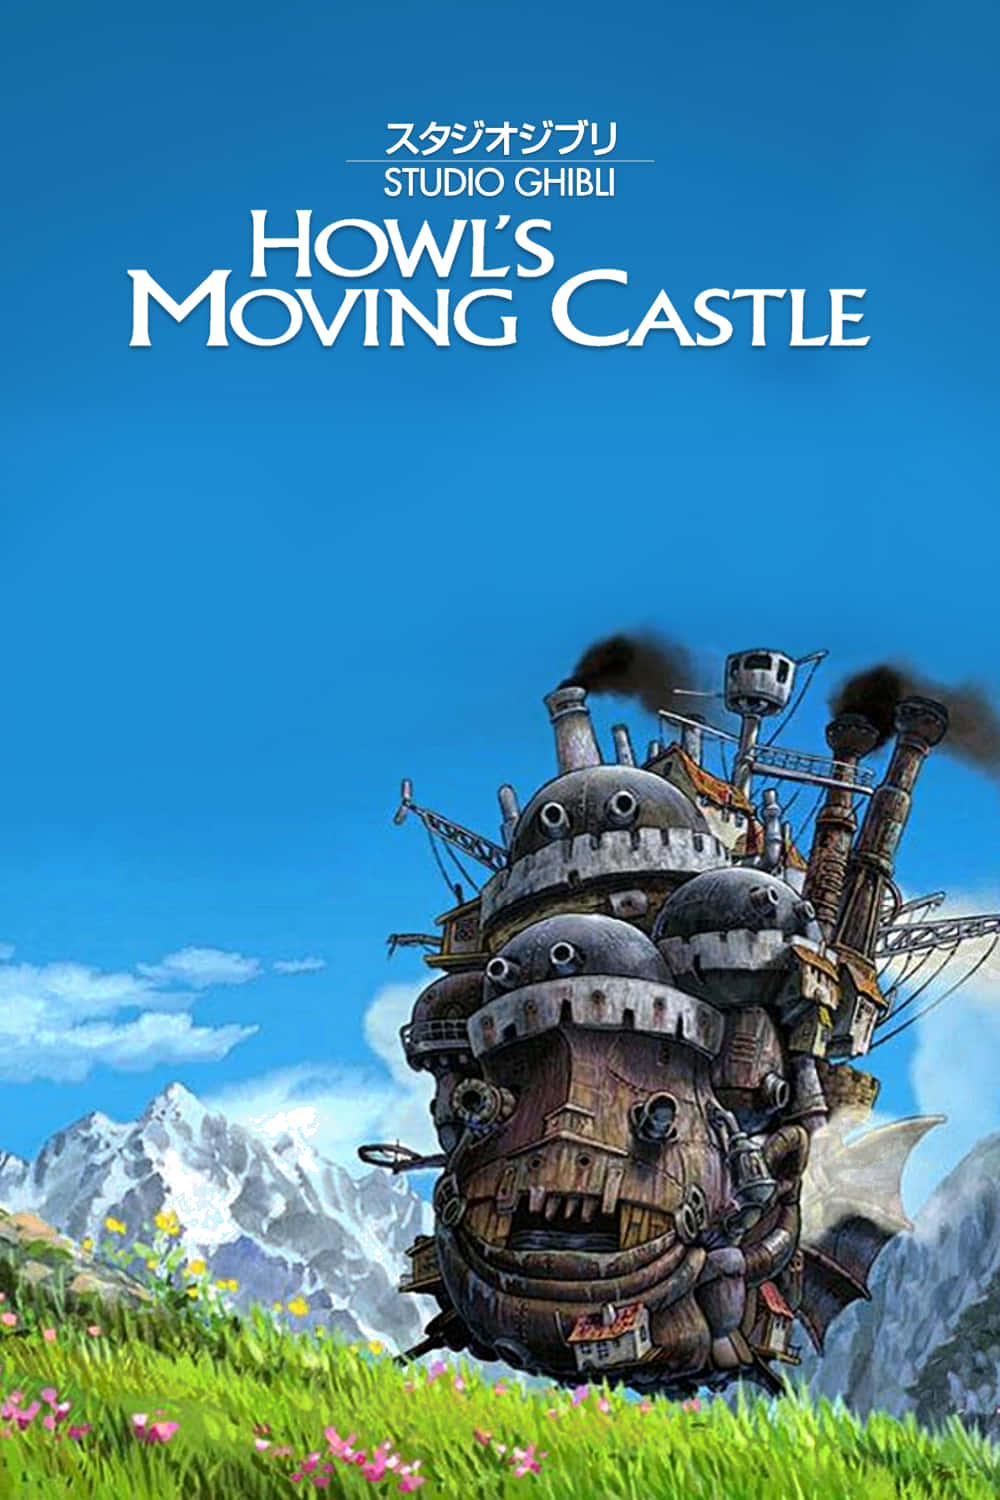 Pôsterda Studio Ghibli Do Filme O Castelo Animado, Do Diretor Hayao Miyazaki.